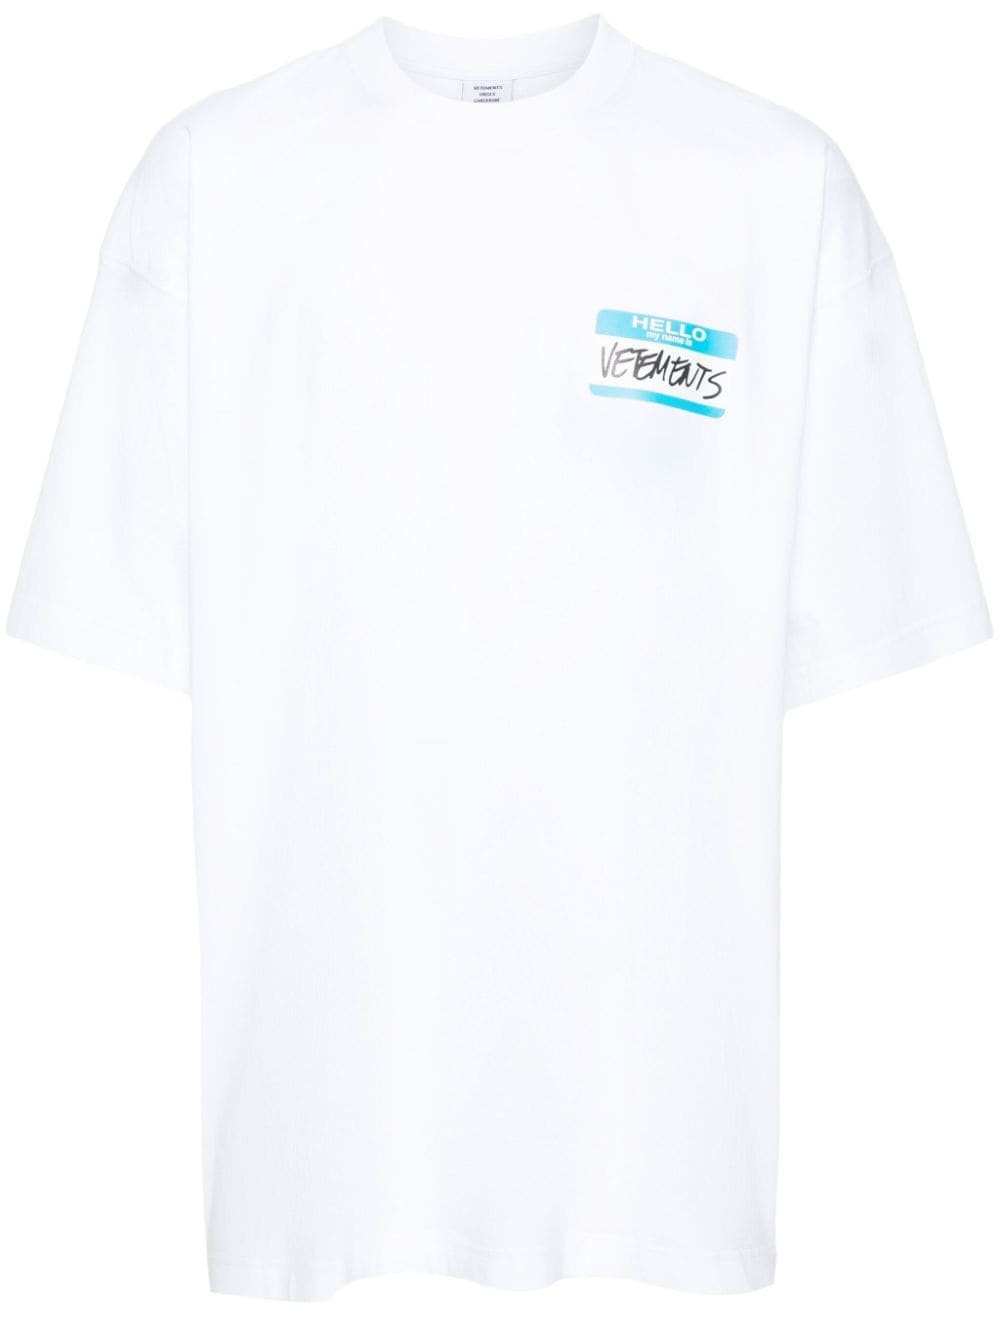 Name-Tag cotton T-shirt - 1